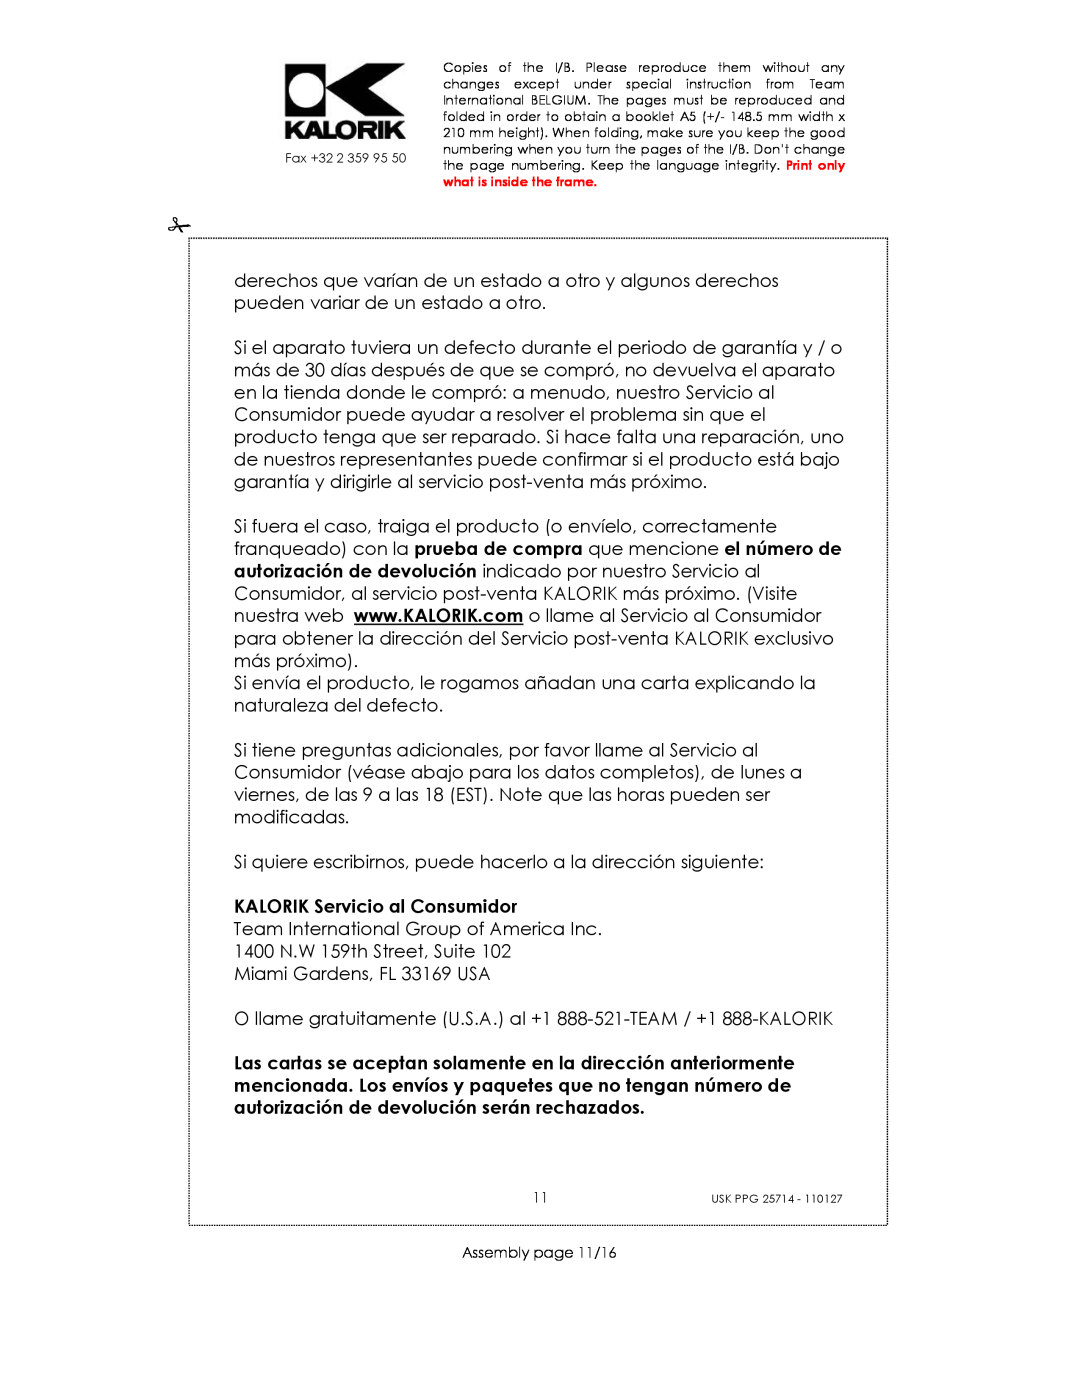 Kalorik USK PPG 25714 manual KALORIK Servicio al Consumidor, Assembly page 11/16 